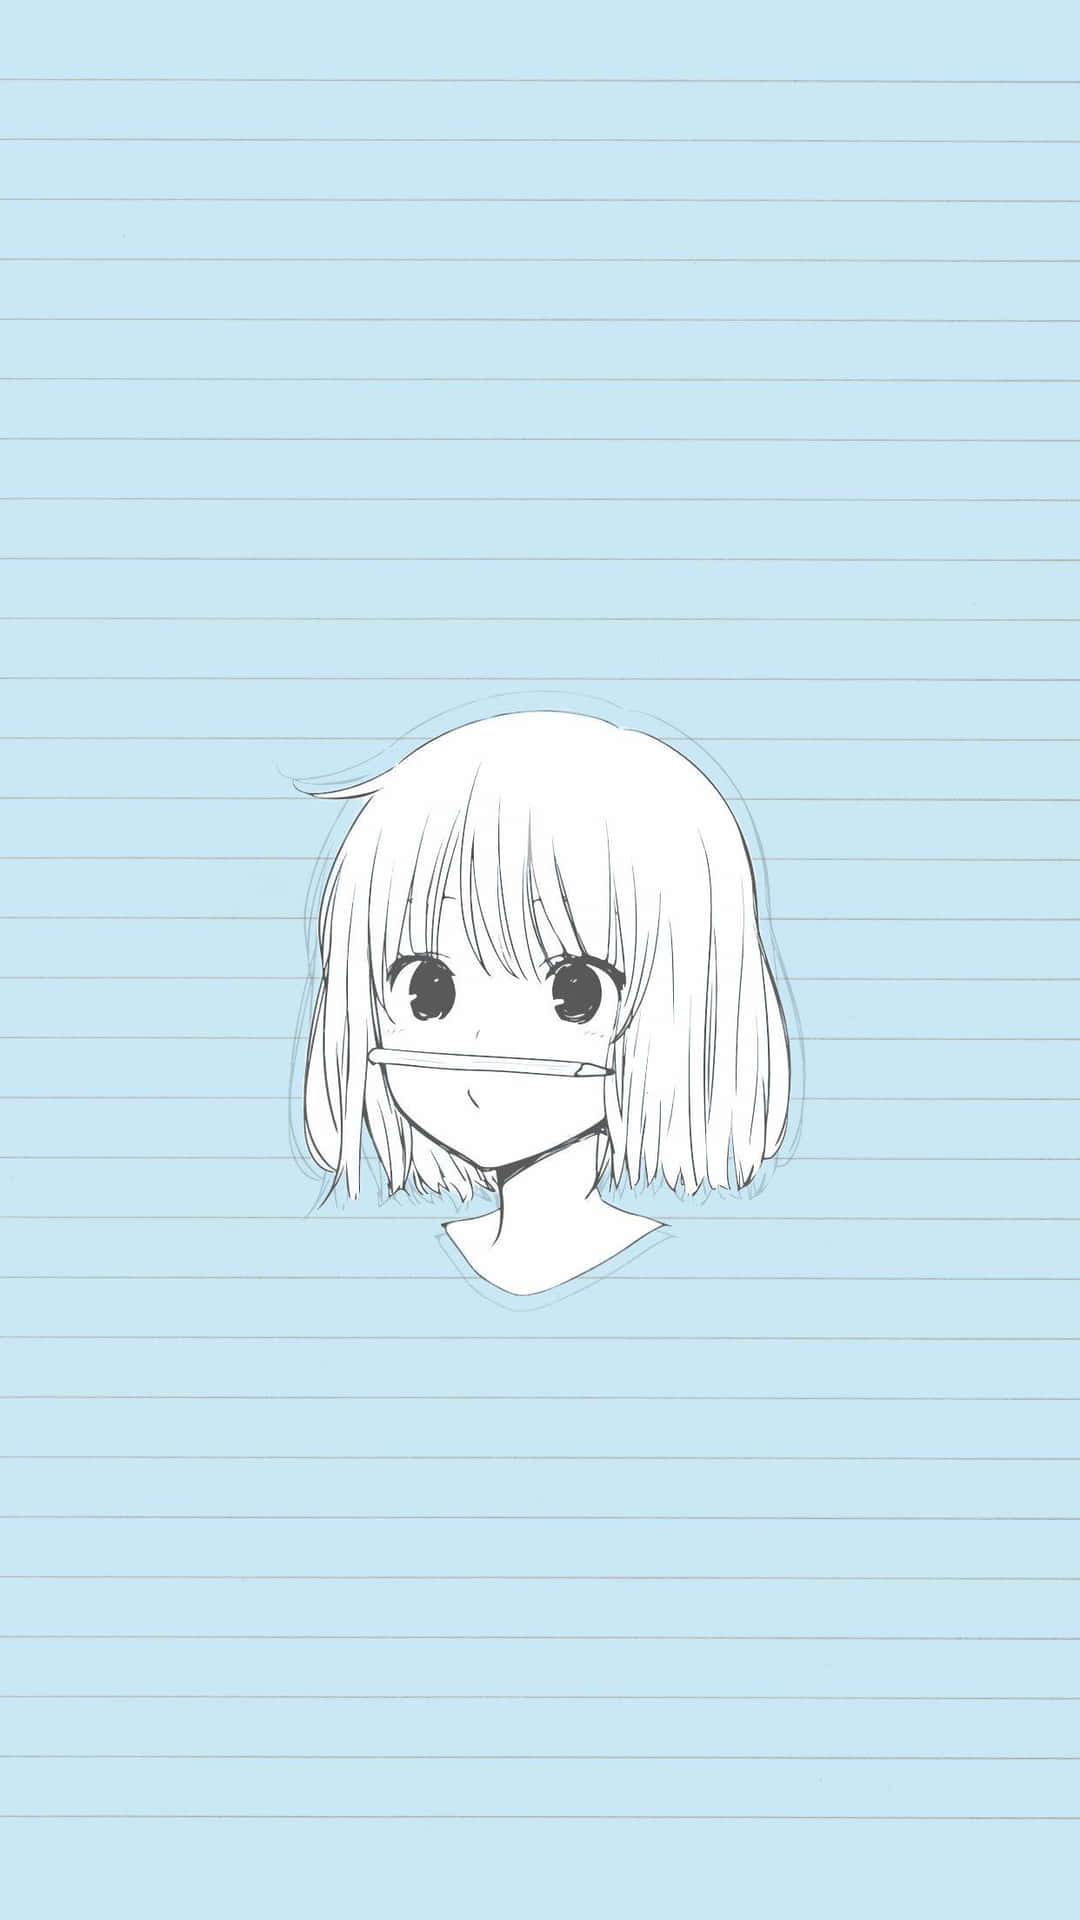 Anime Girl Sketchon Blue Lines Wallpaper